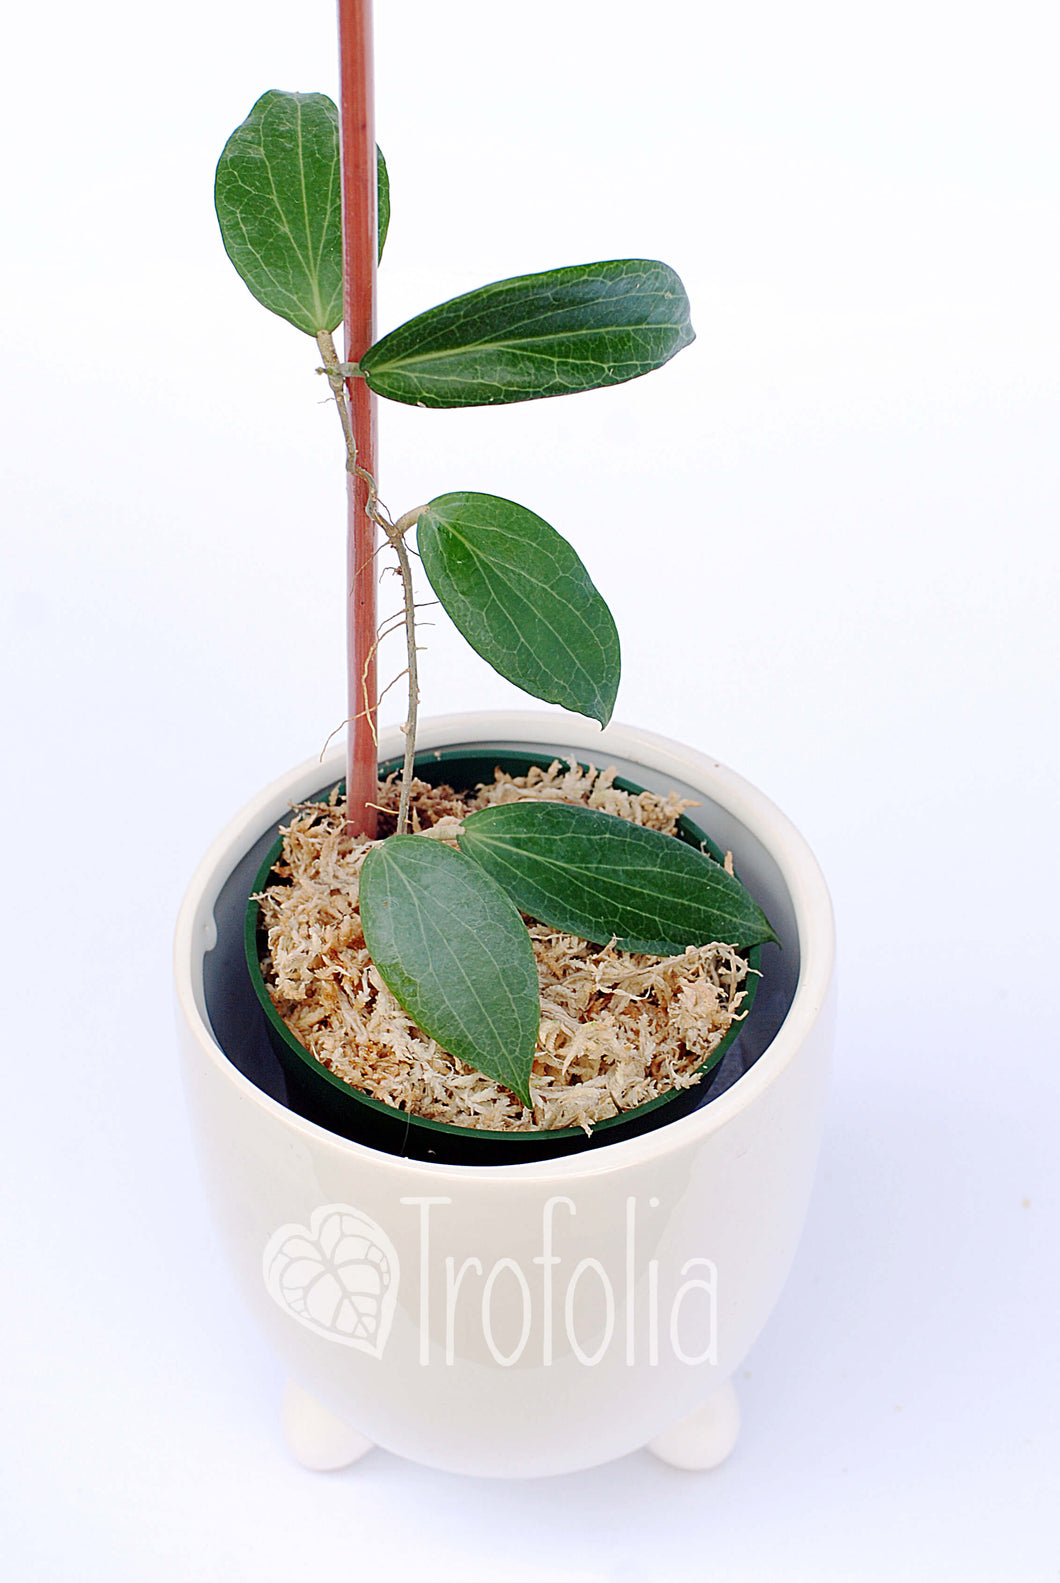 Hoya Fitchii - Trofolia